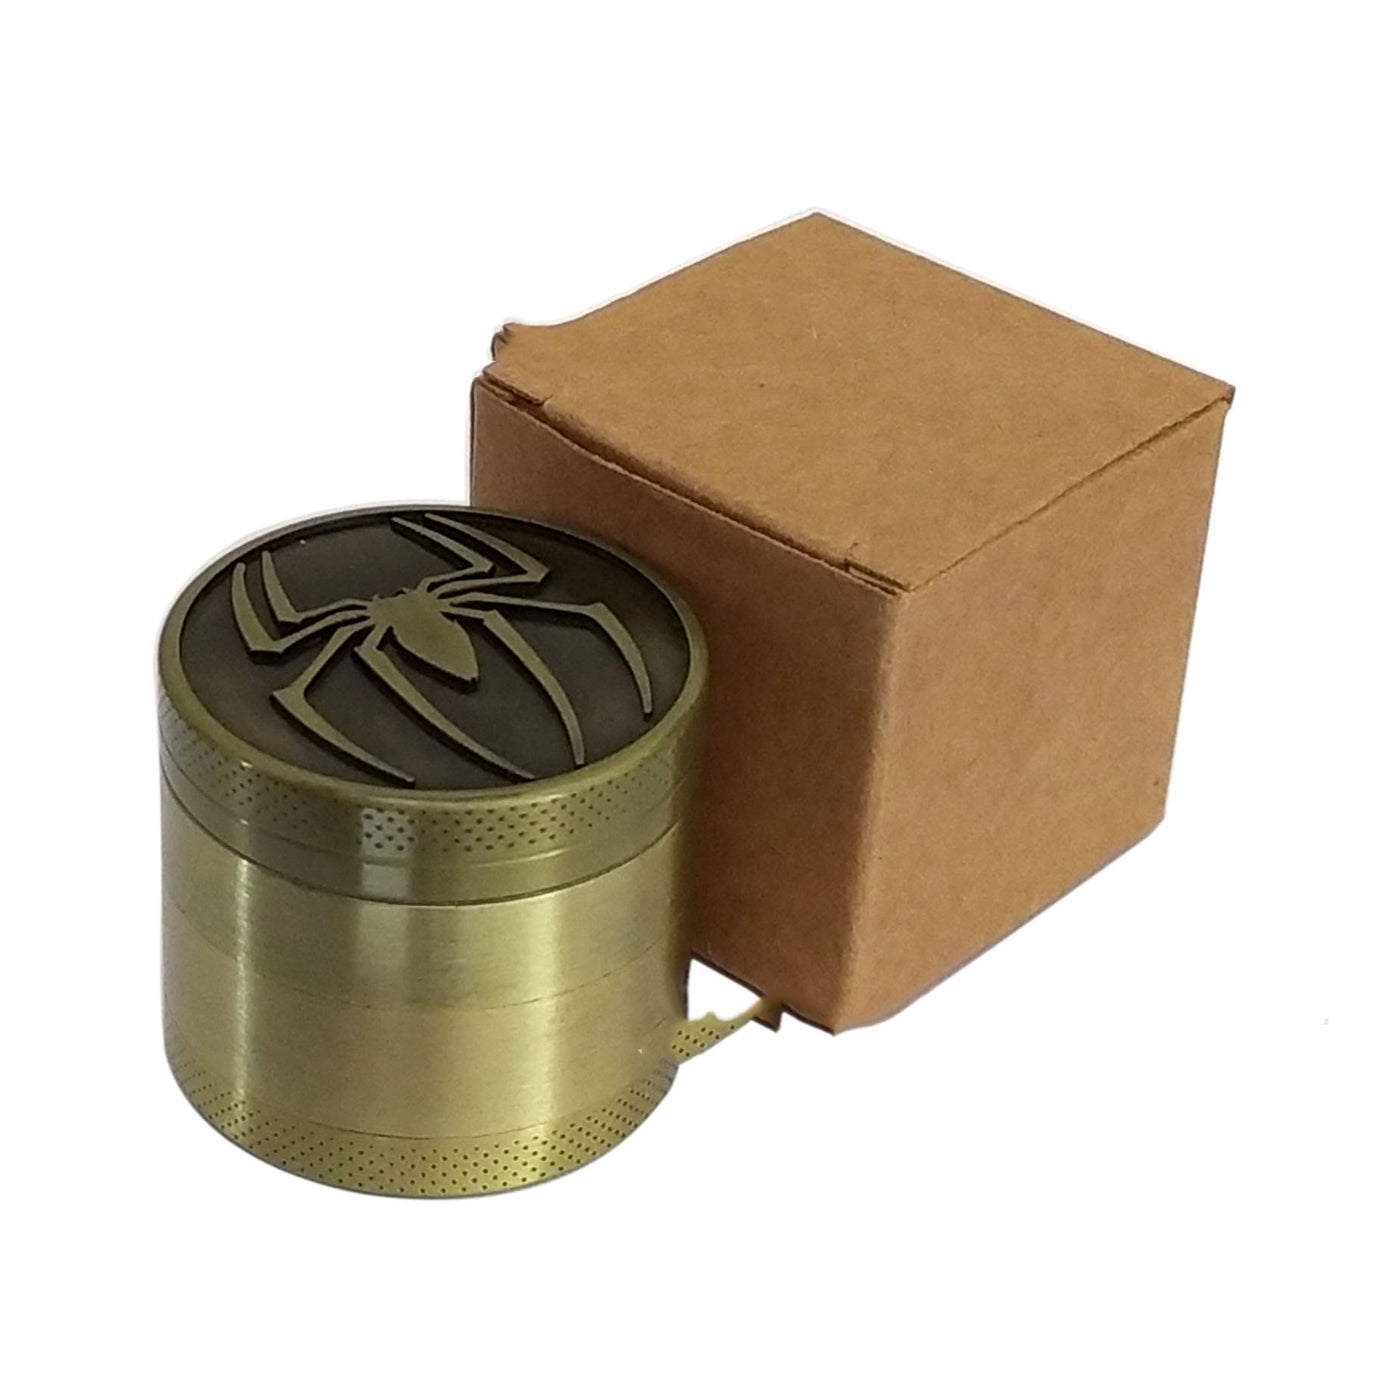 40mm 4-Layer Bronze Cigarette Crusher, Four-Layer Grinder Cigarette Box